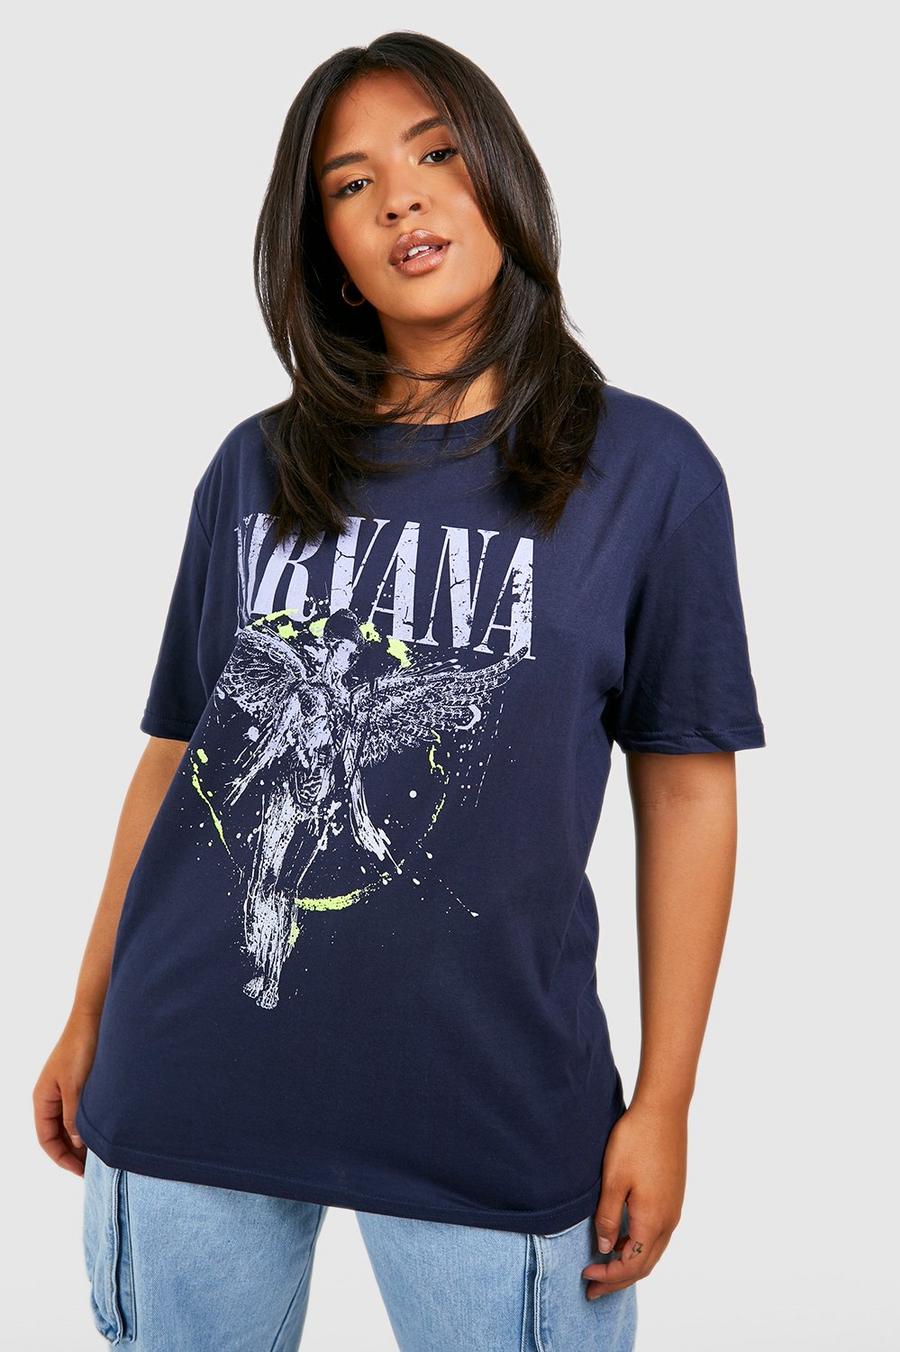 T-shirt Plus Size dei Nirvana in colori fluo, Navy blu oltremare